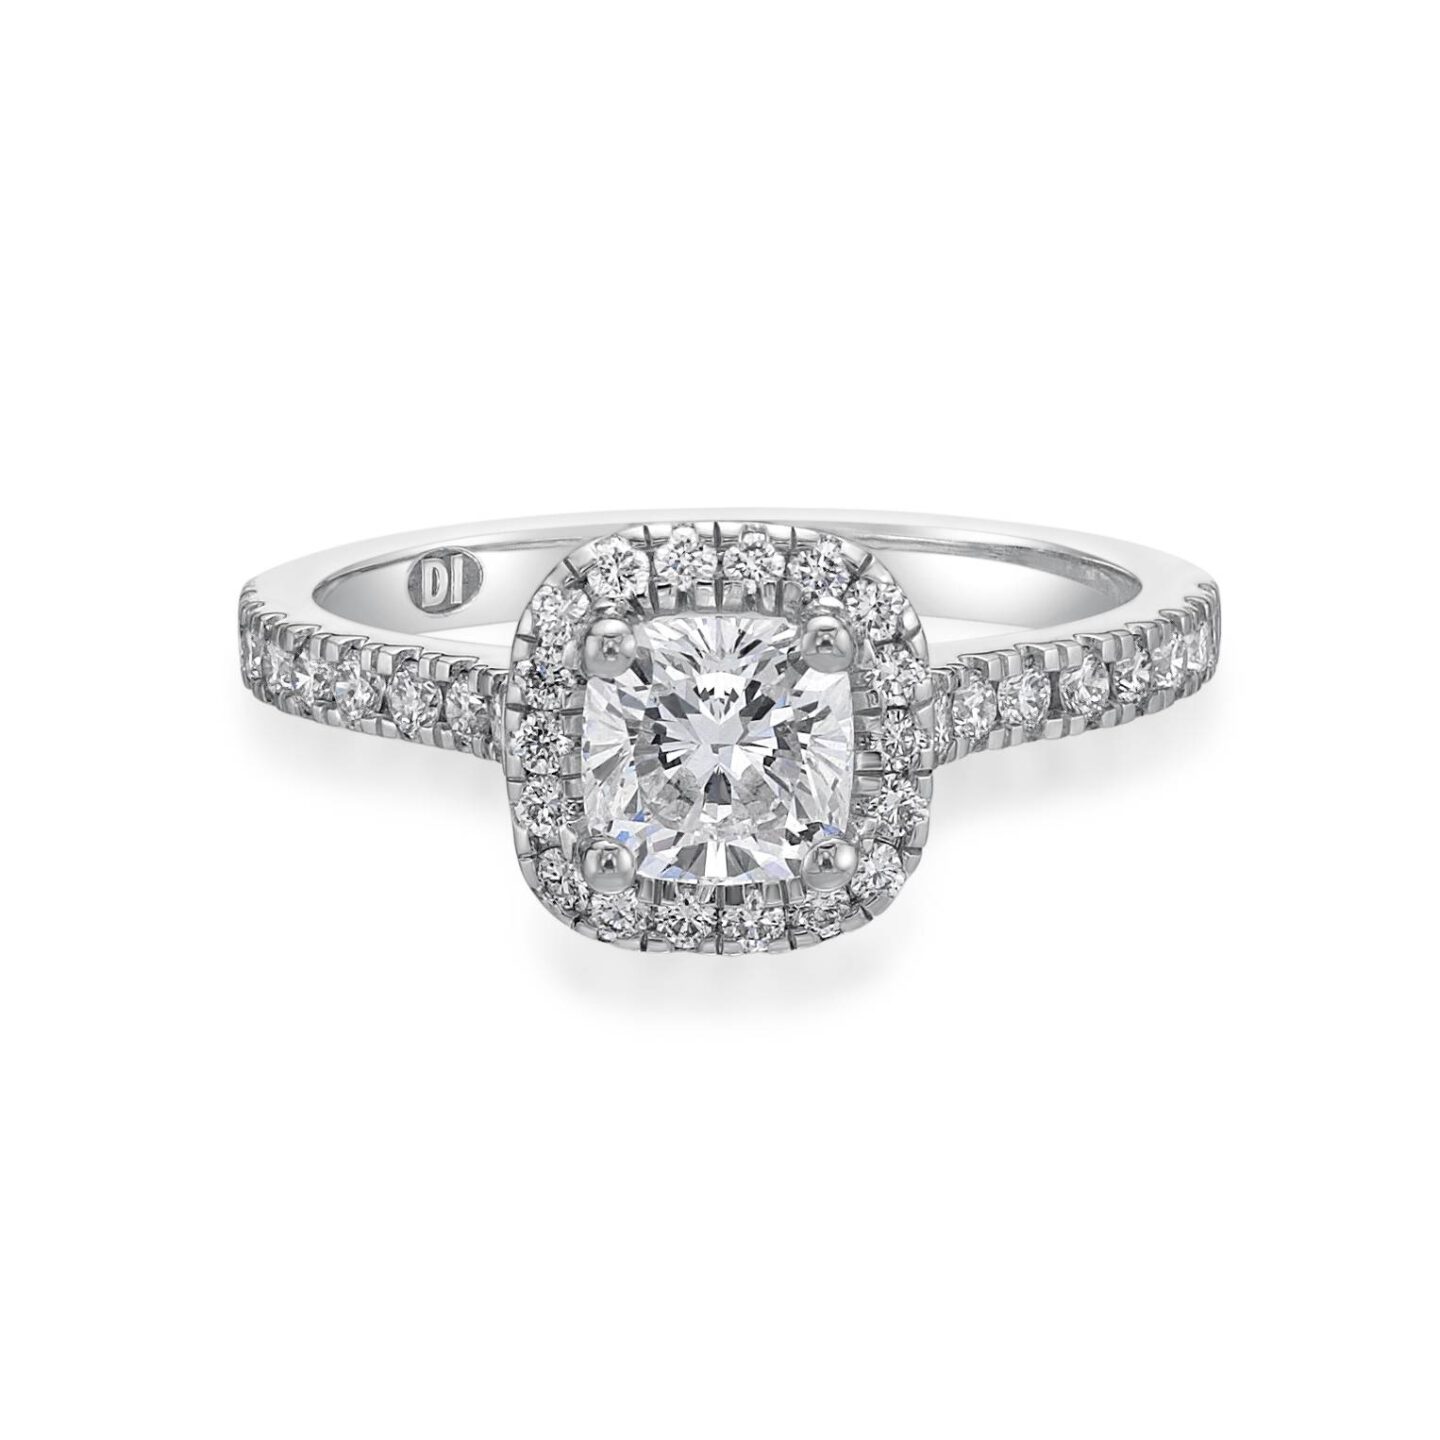 Maia – Cushion Cut Diamond Engagement Ring